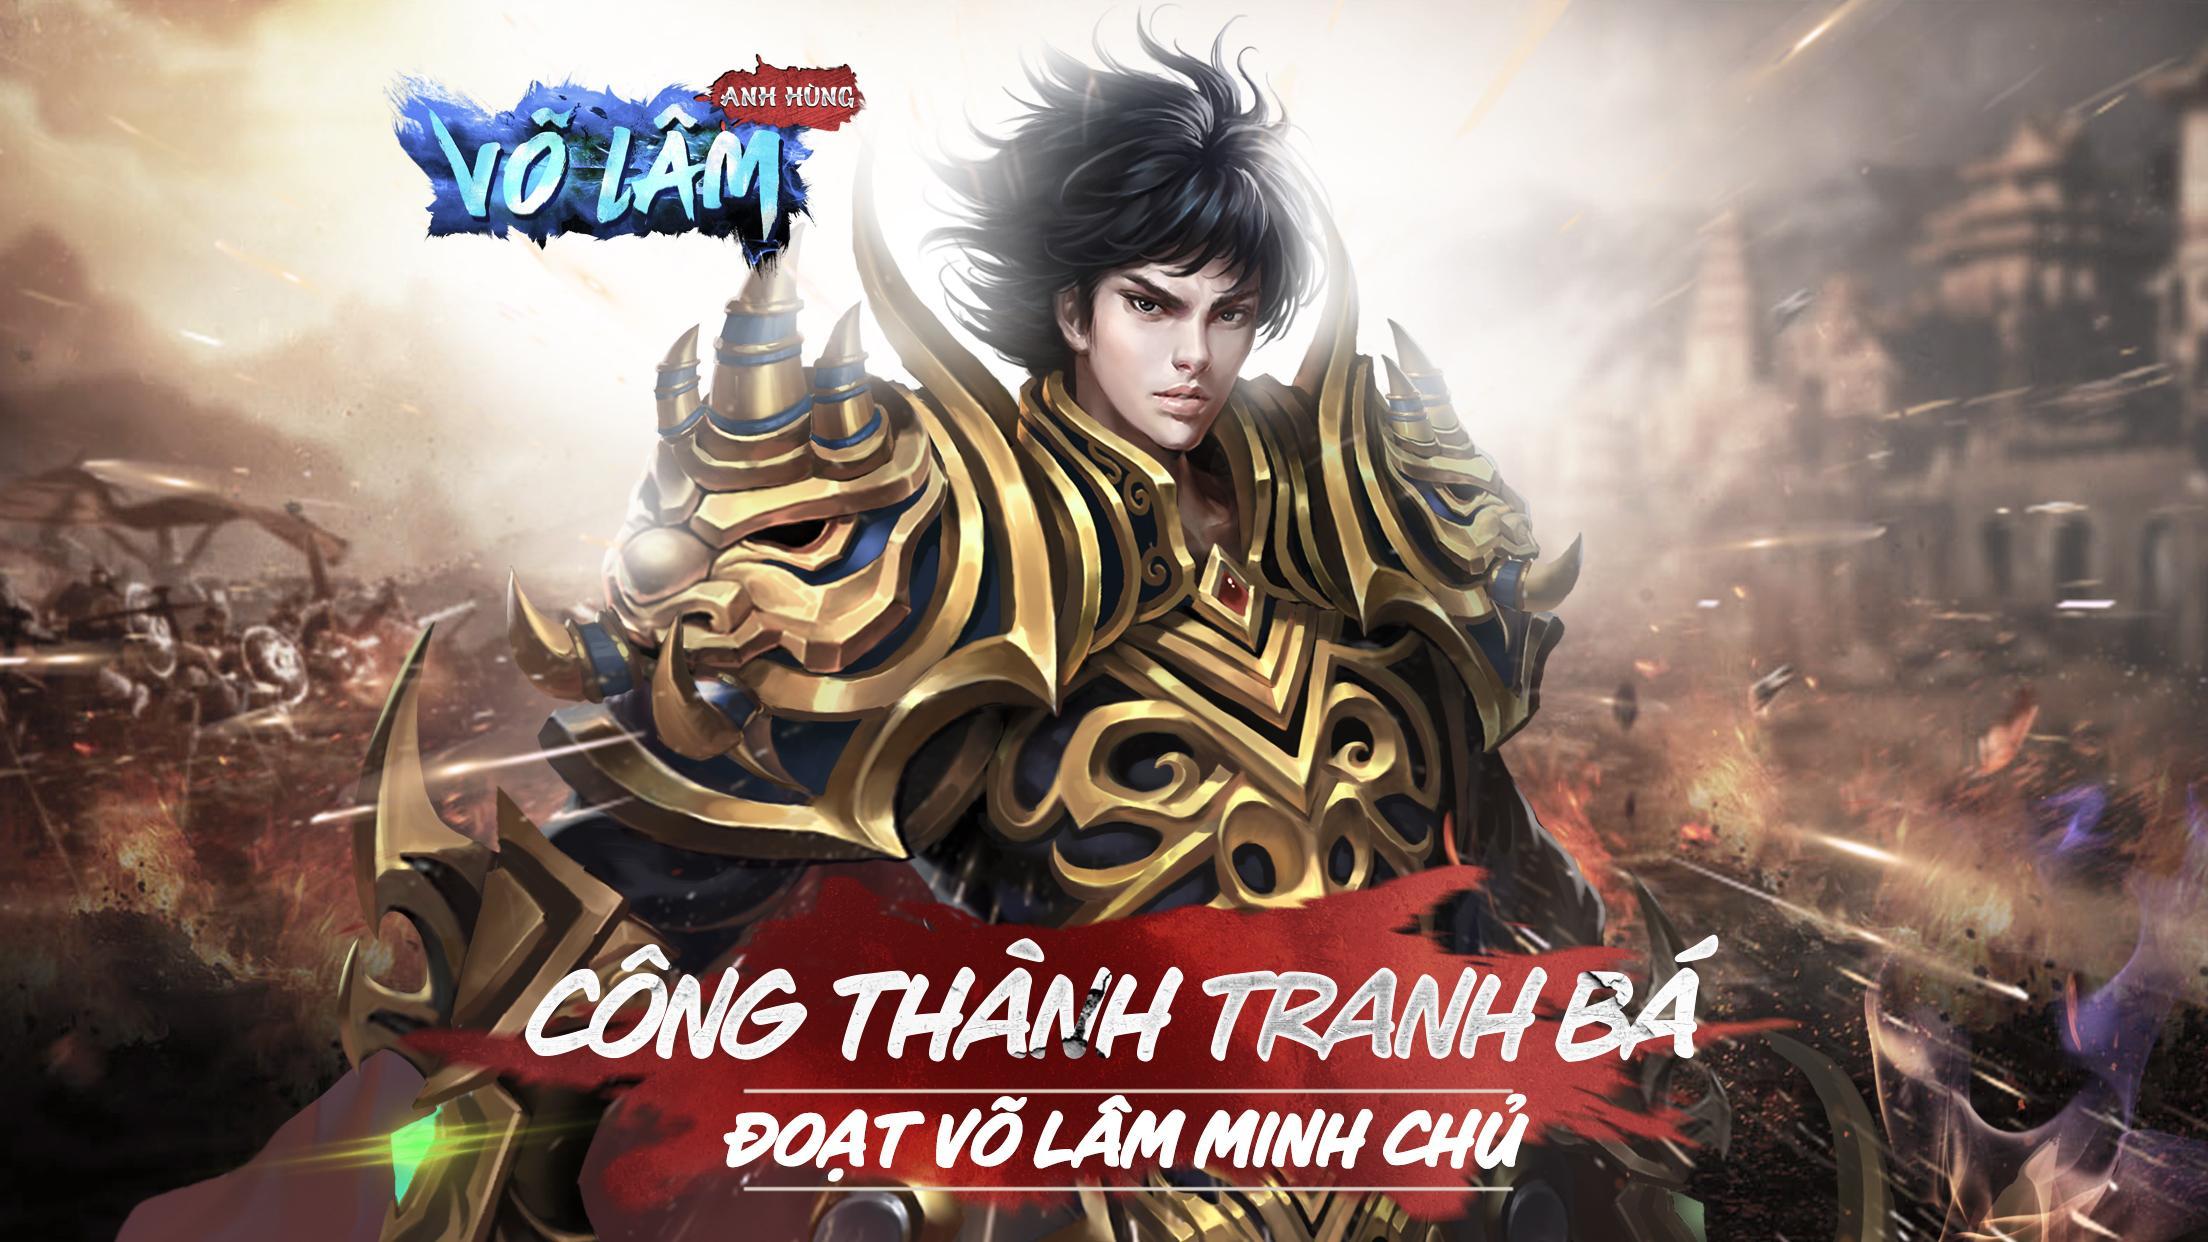 Screenshot 1 of Held Vo Lam-Cong Thanh 1.0.99635.100